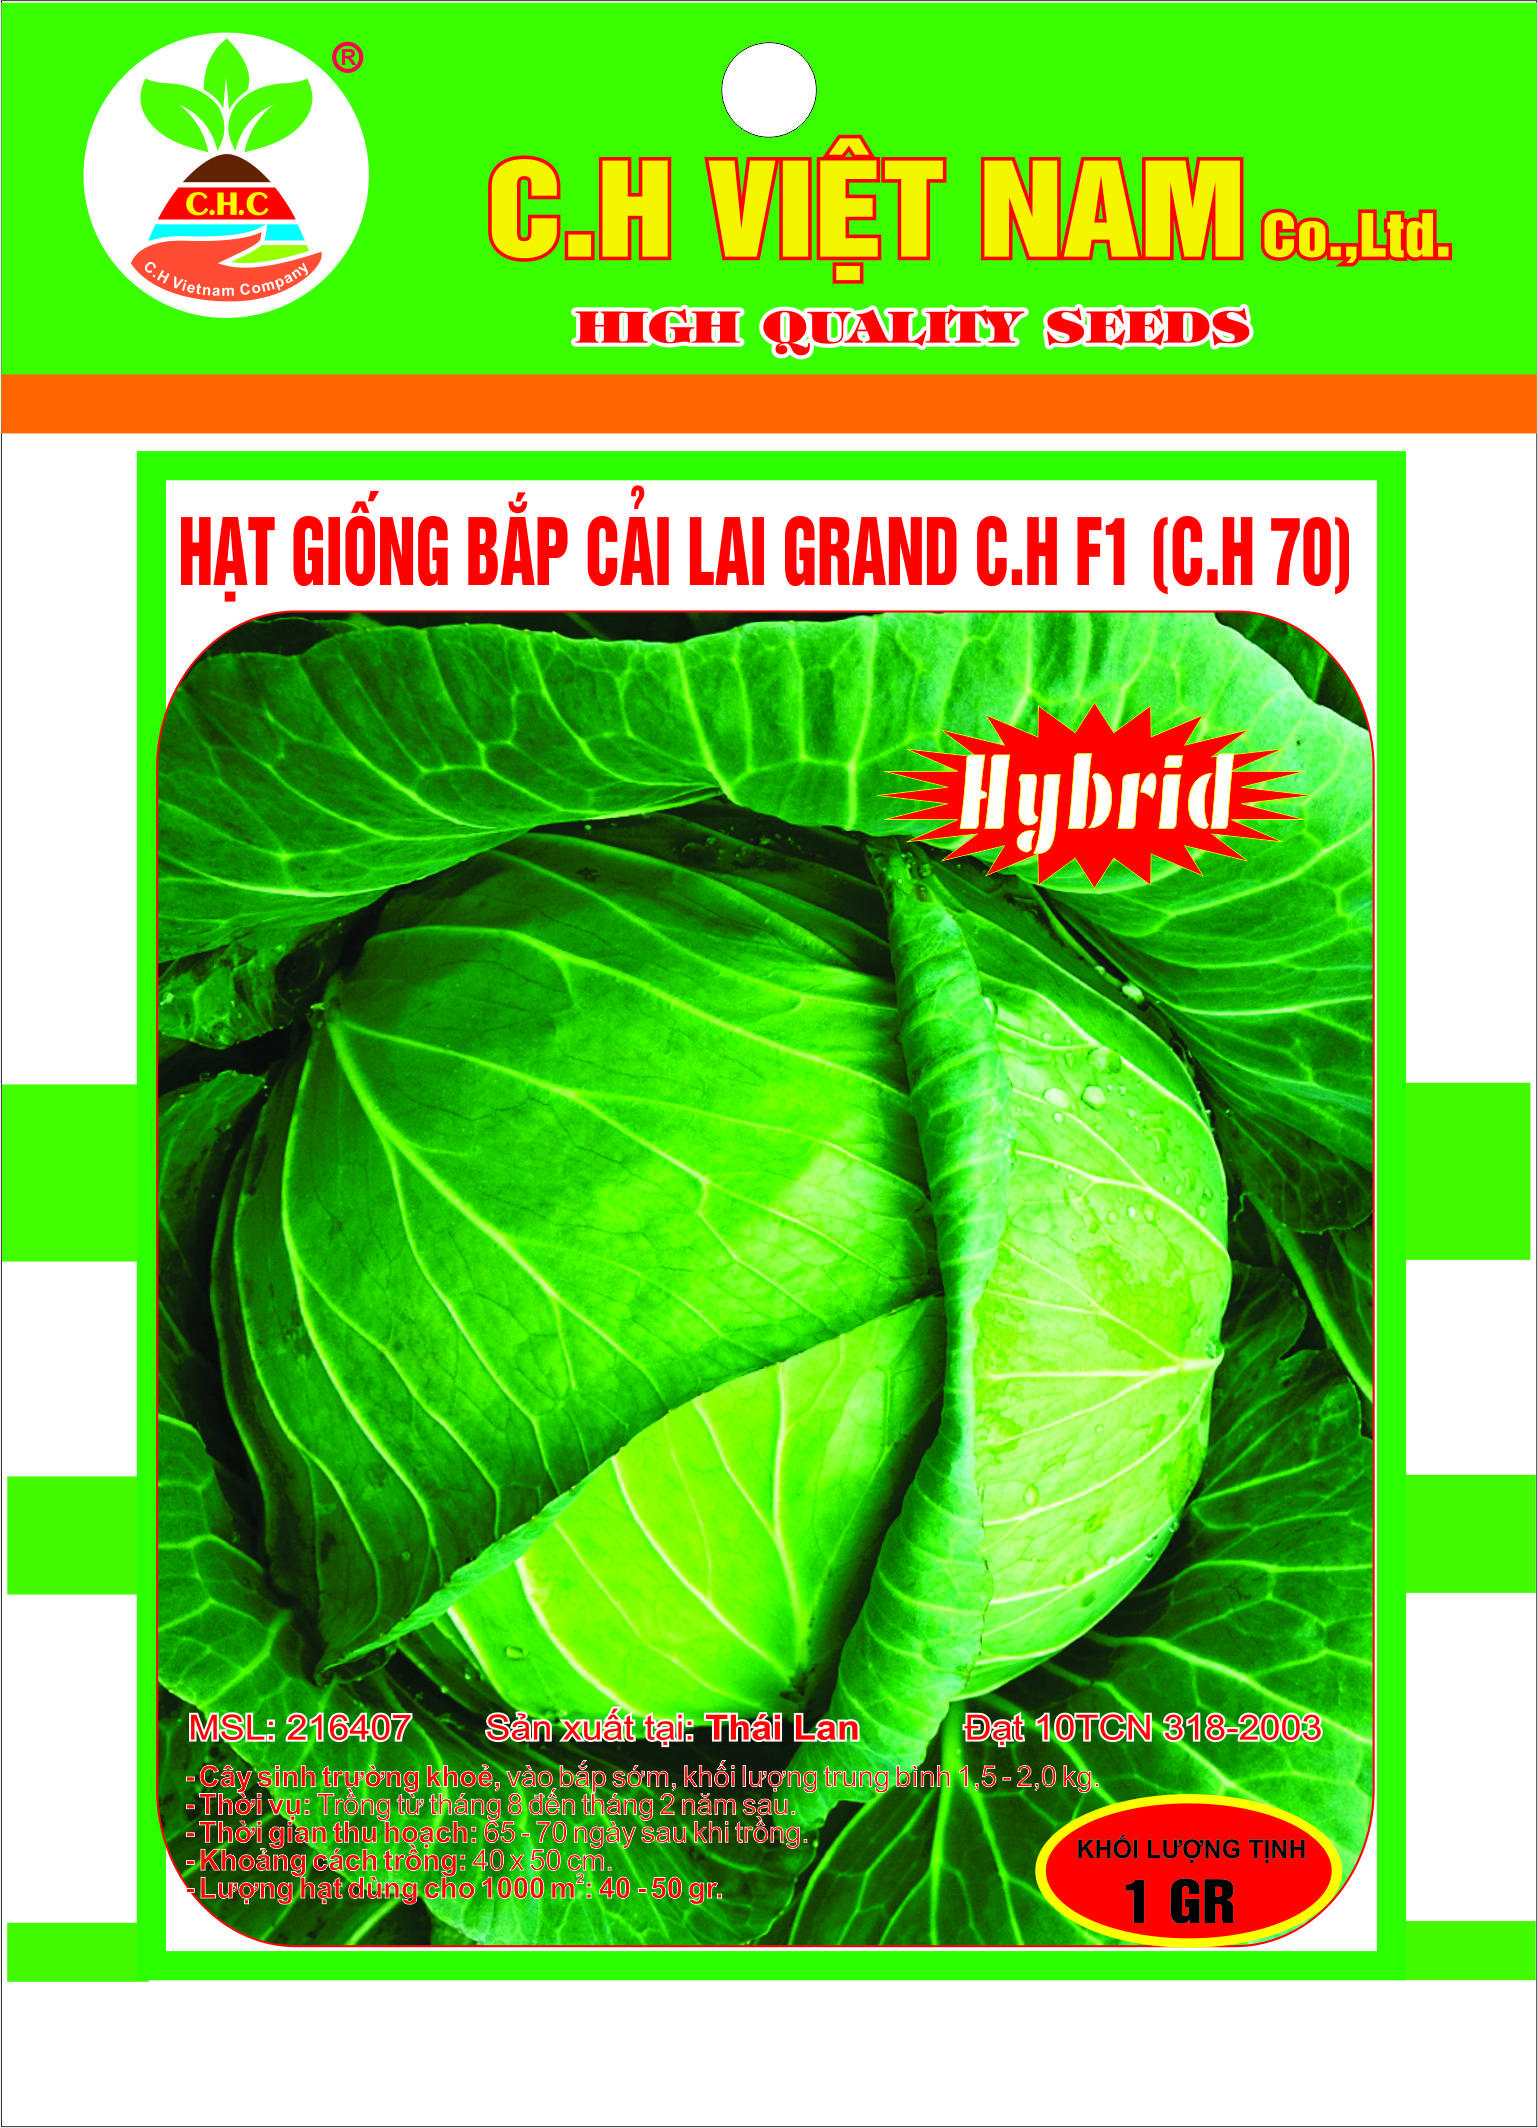 Grand C.H F1 hybrid cabbage seeds